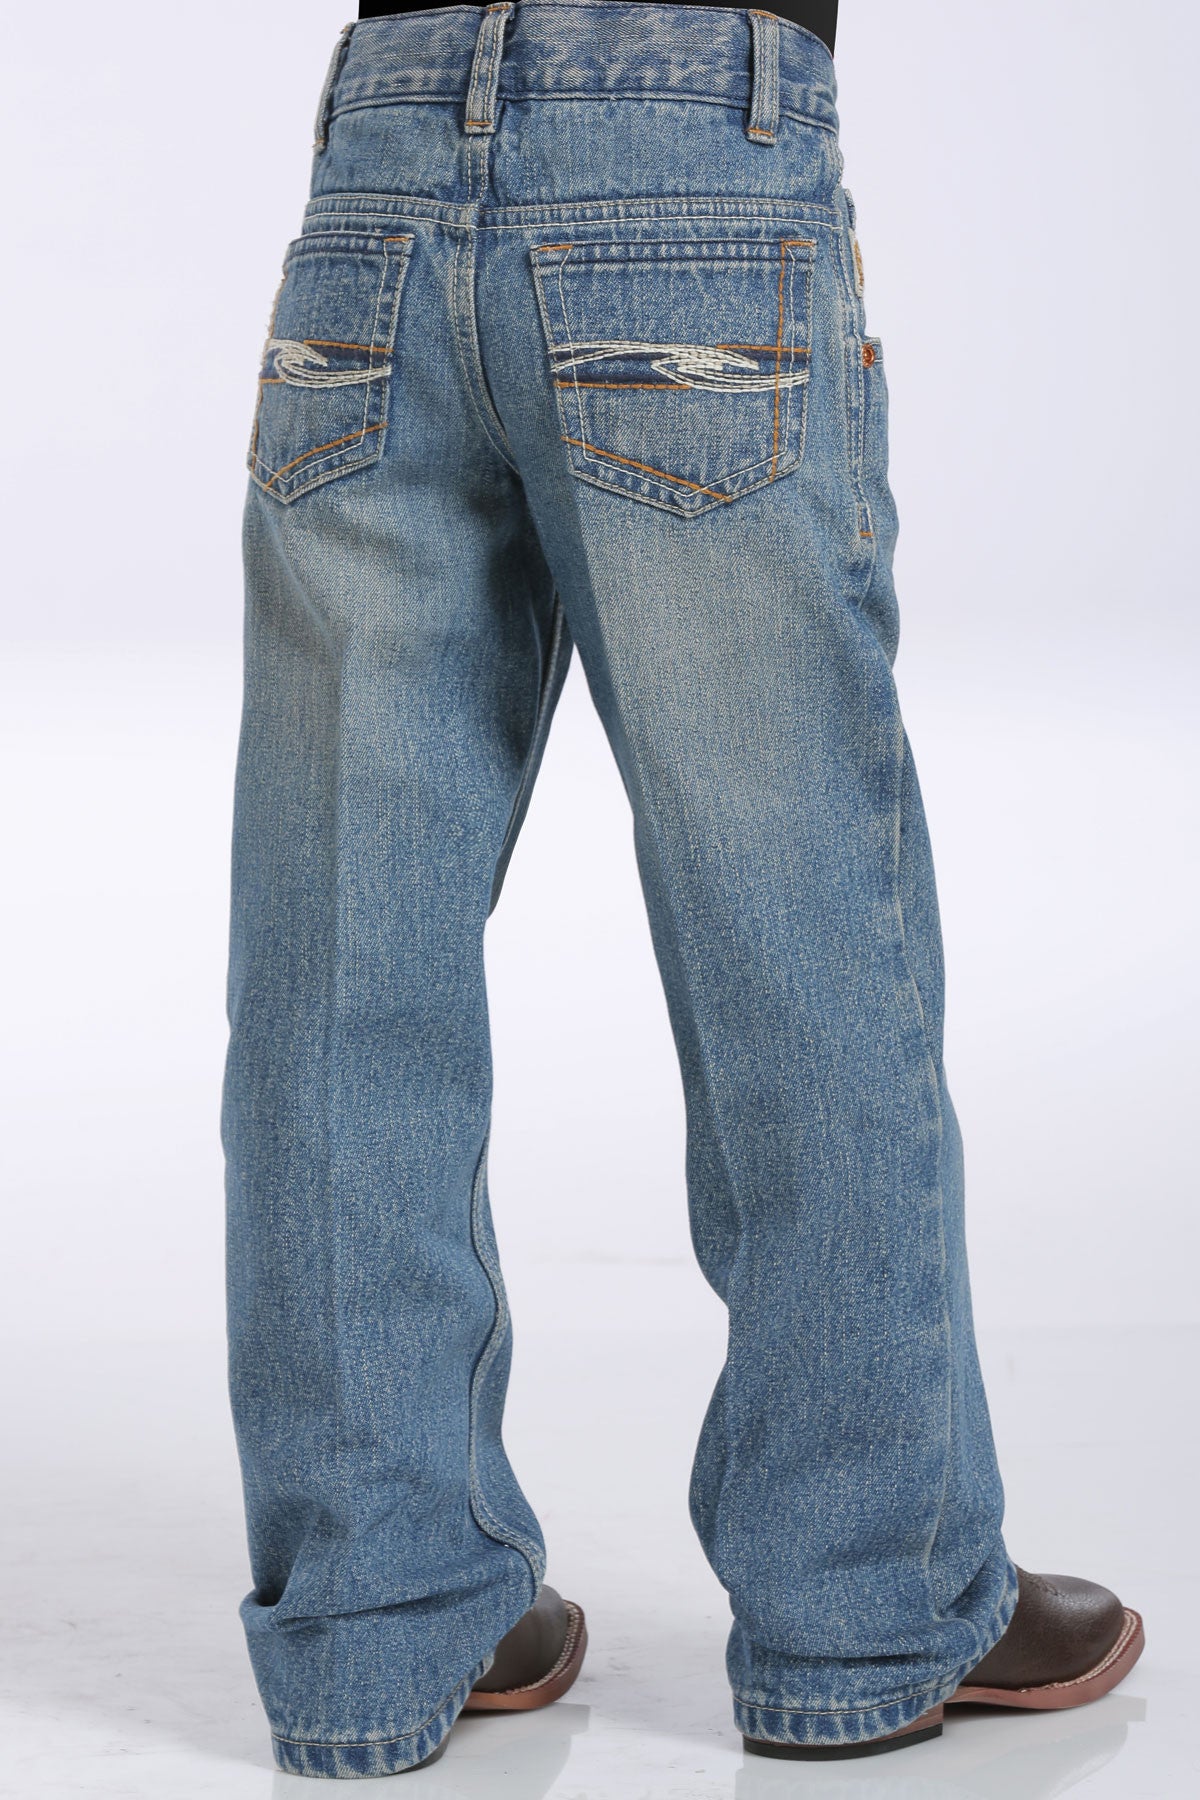 Boys Cinch Tanner Jeans *LAST PAIR*